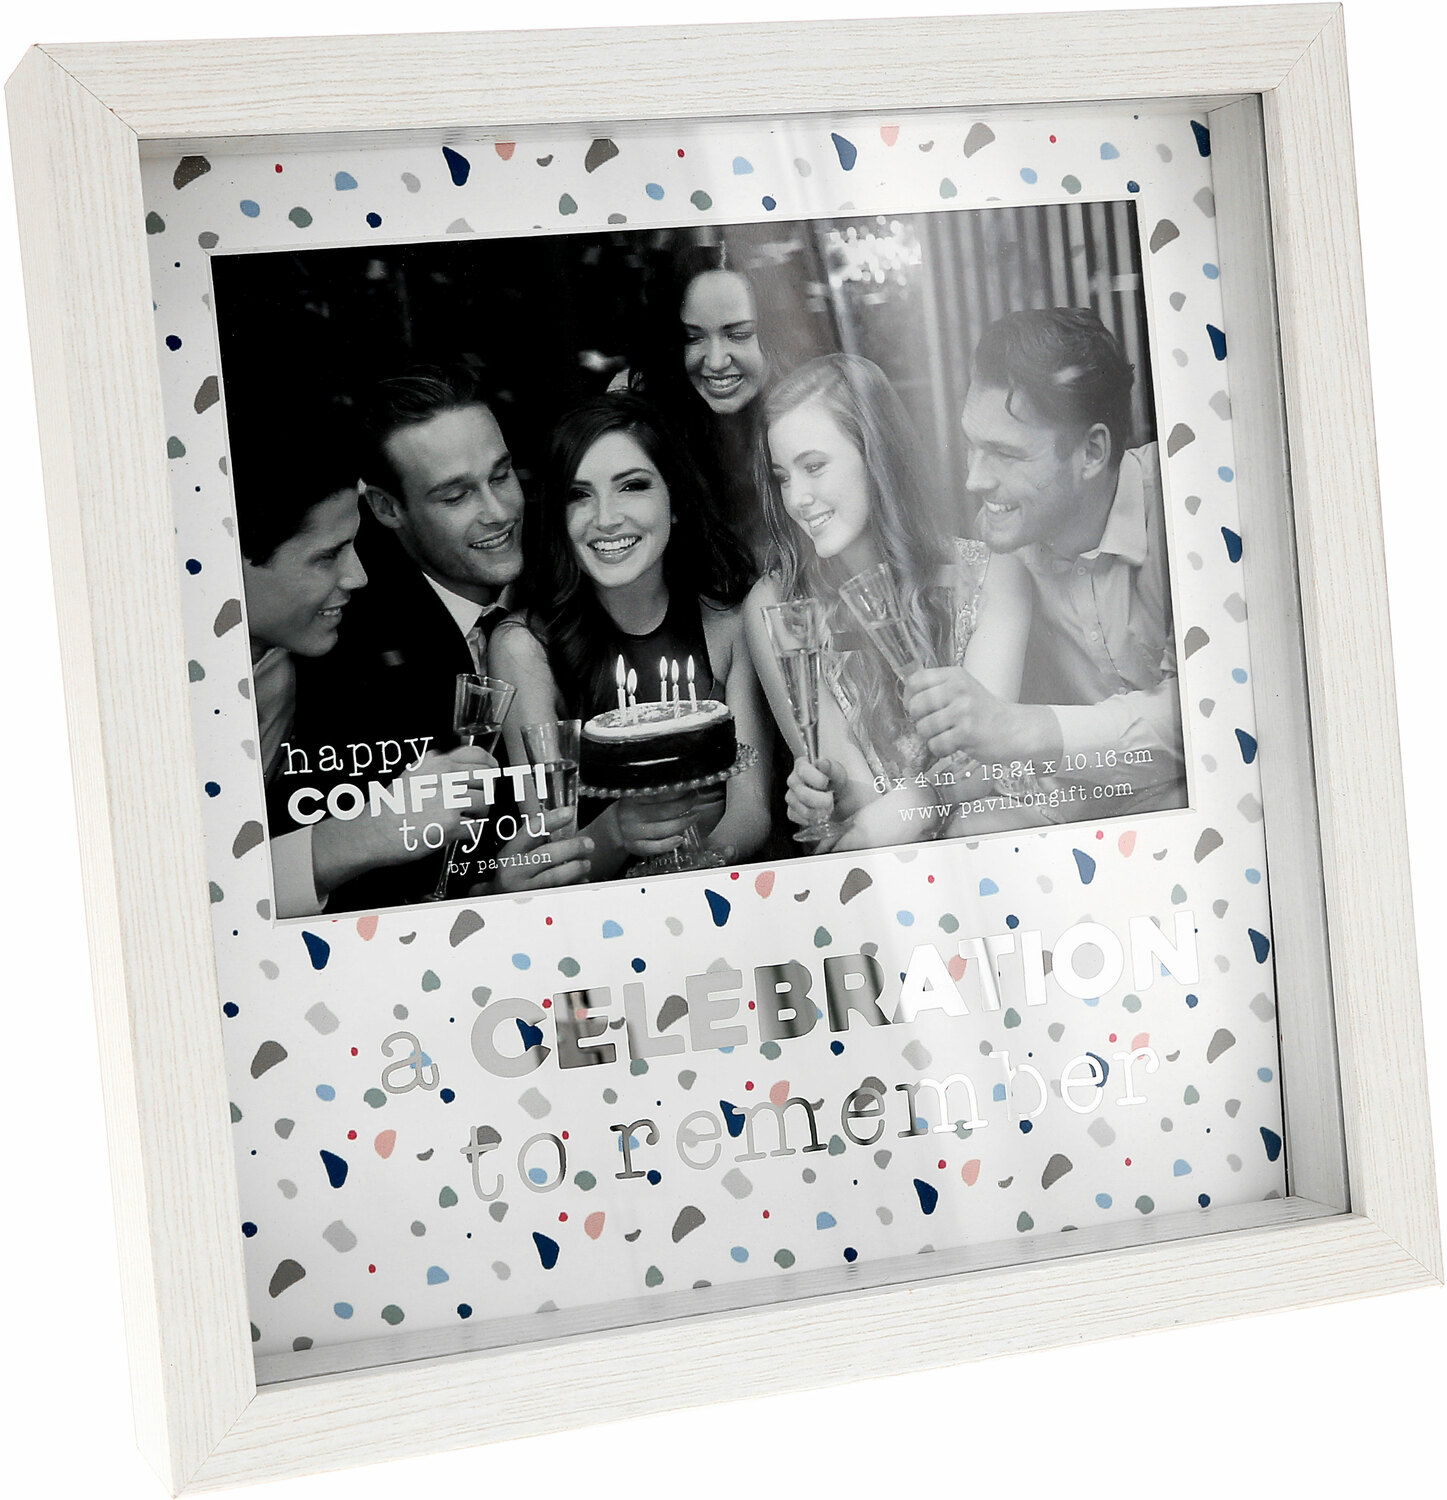 Celebration by Happy Confetti to You - Celebration - 7.5" Shadow Box Frame
(Holds 6" x 4" Photo)